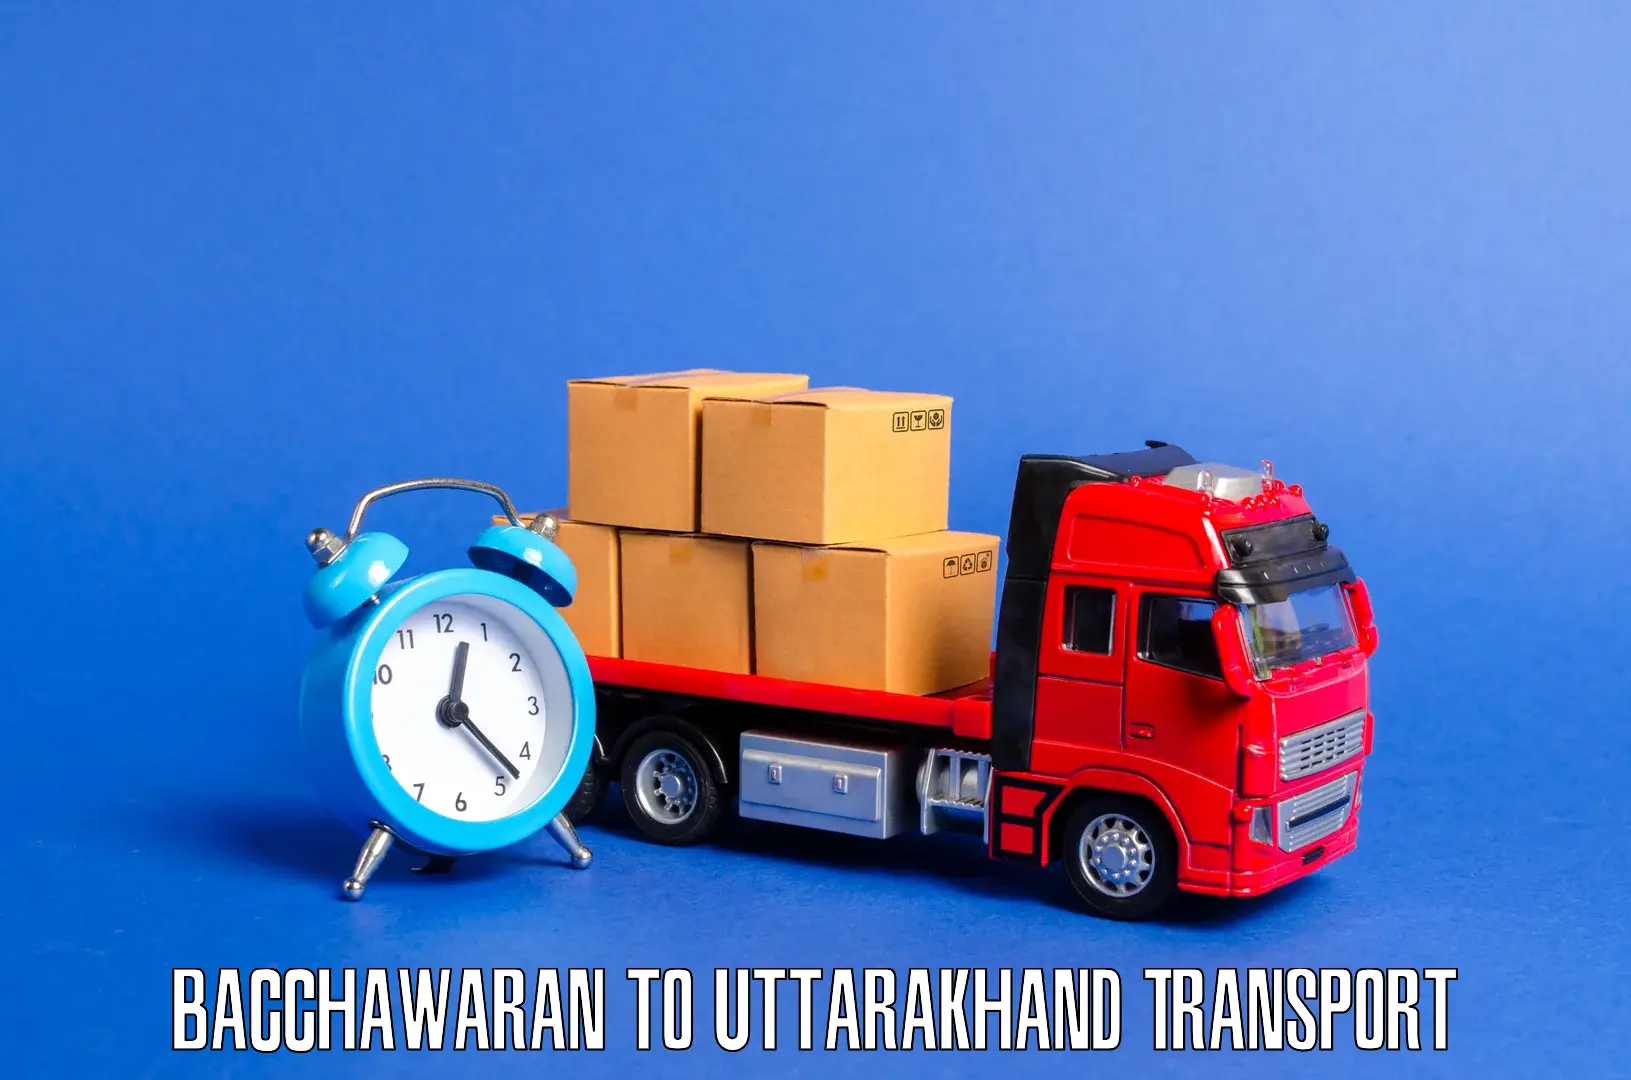 Cargo train transport services Bacchawaran to Rudrapur